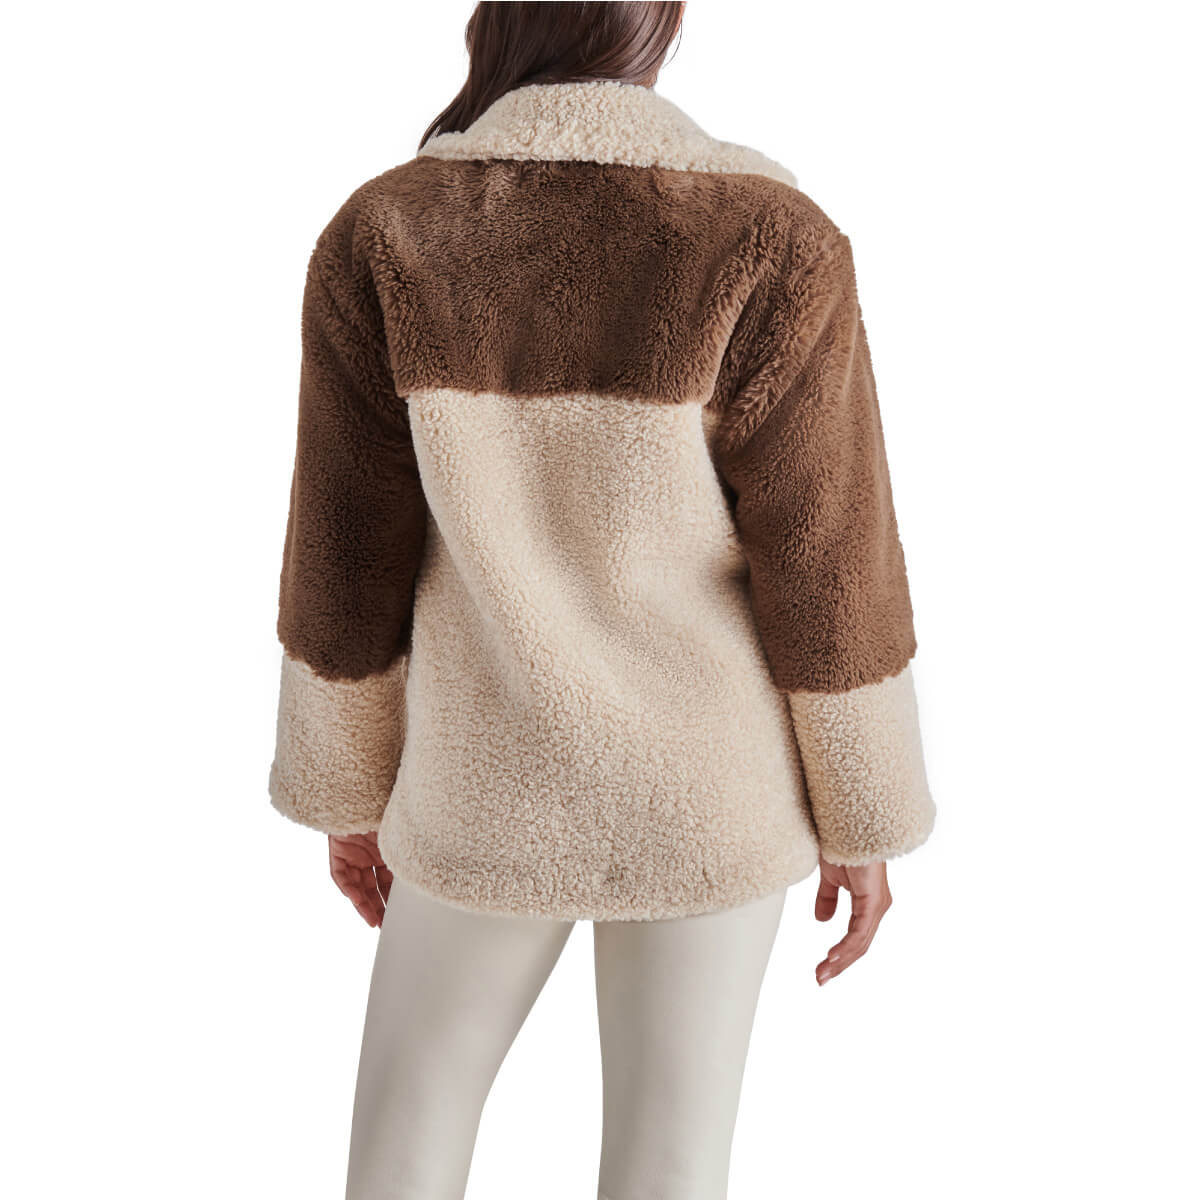 Steve Madden Willow Faux Fur Color Blocked Coat brown back | MILK MONEY milkmoney.co | cute jackets for women. cute coats. cool jackets for women. stylish jackets for women. trendy jackets for women. trendy womens coats.